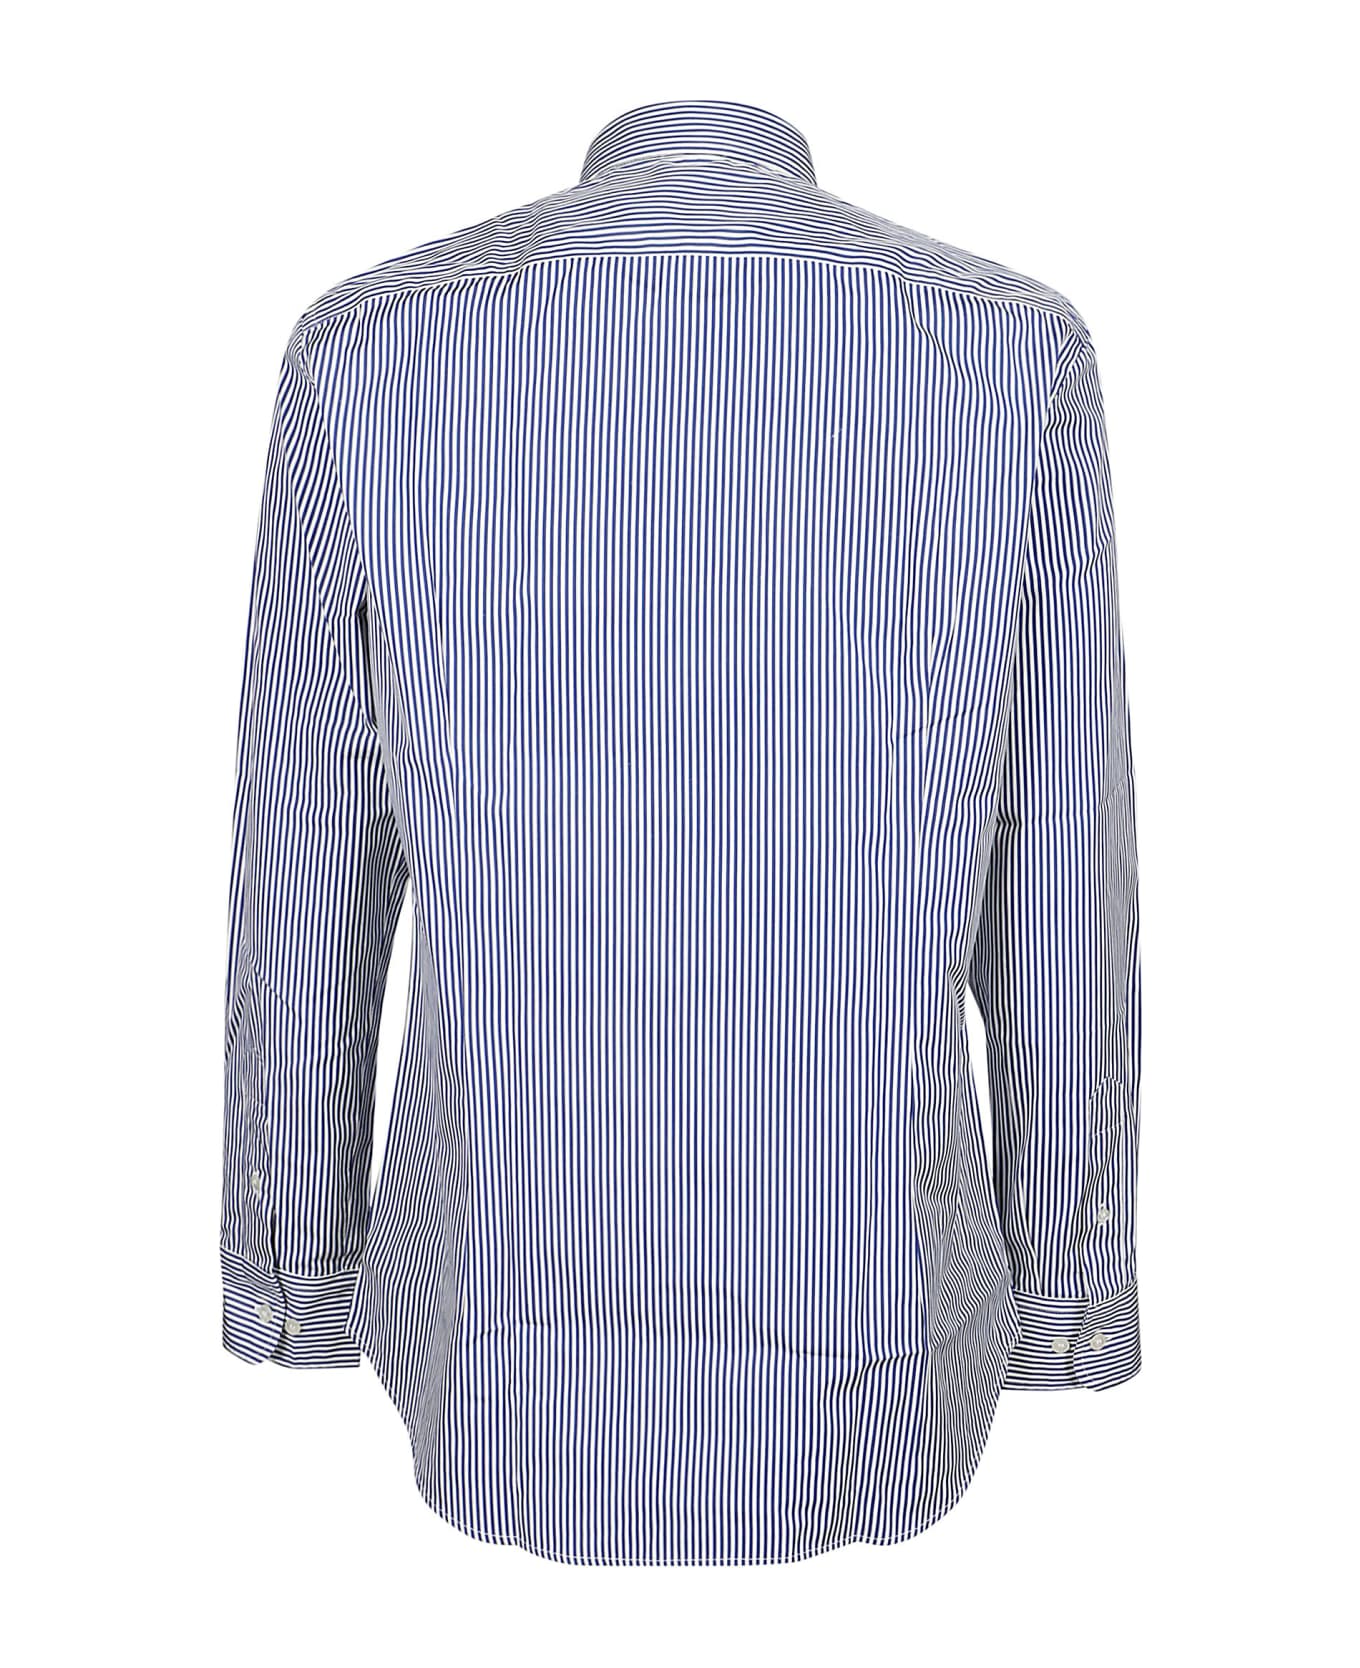 Etro Roma Long Sleeve Shirt - Bianco/blu シャツ